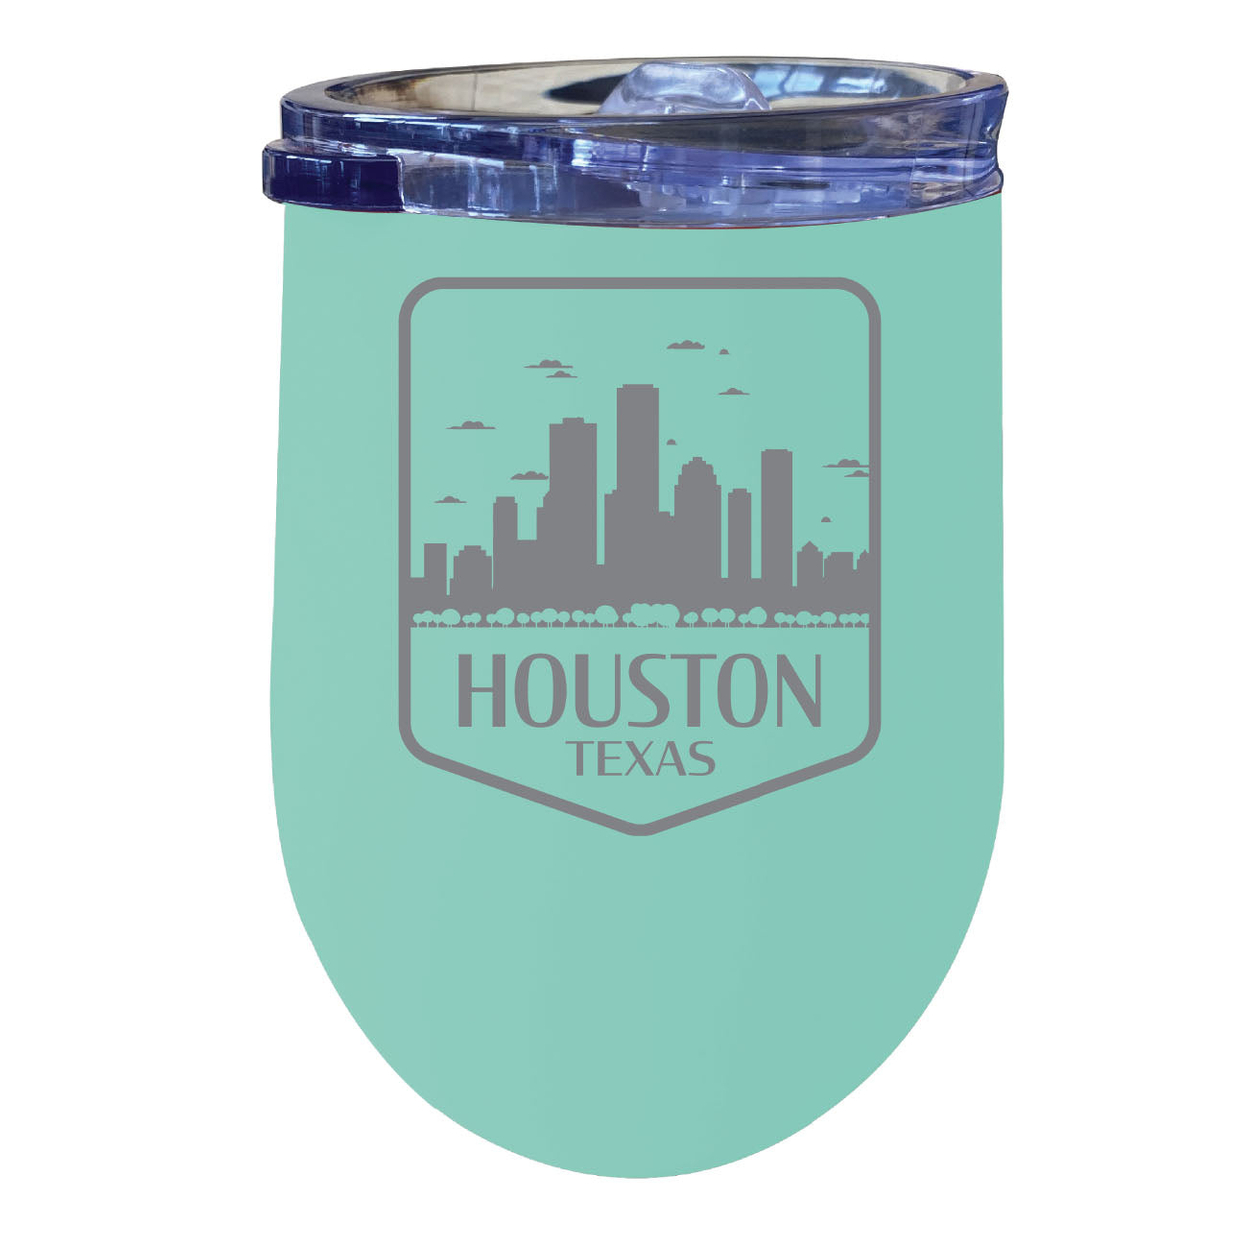 Houston Texas Souvenir 12 Oz Engraved Insulated Wine Stainless Steel Tumbler - Seafoam,,4-Pack